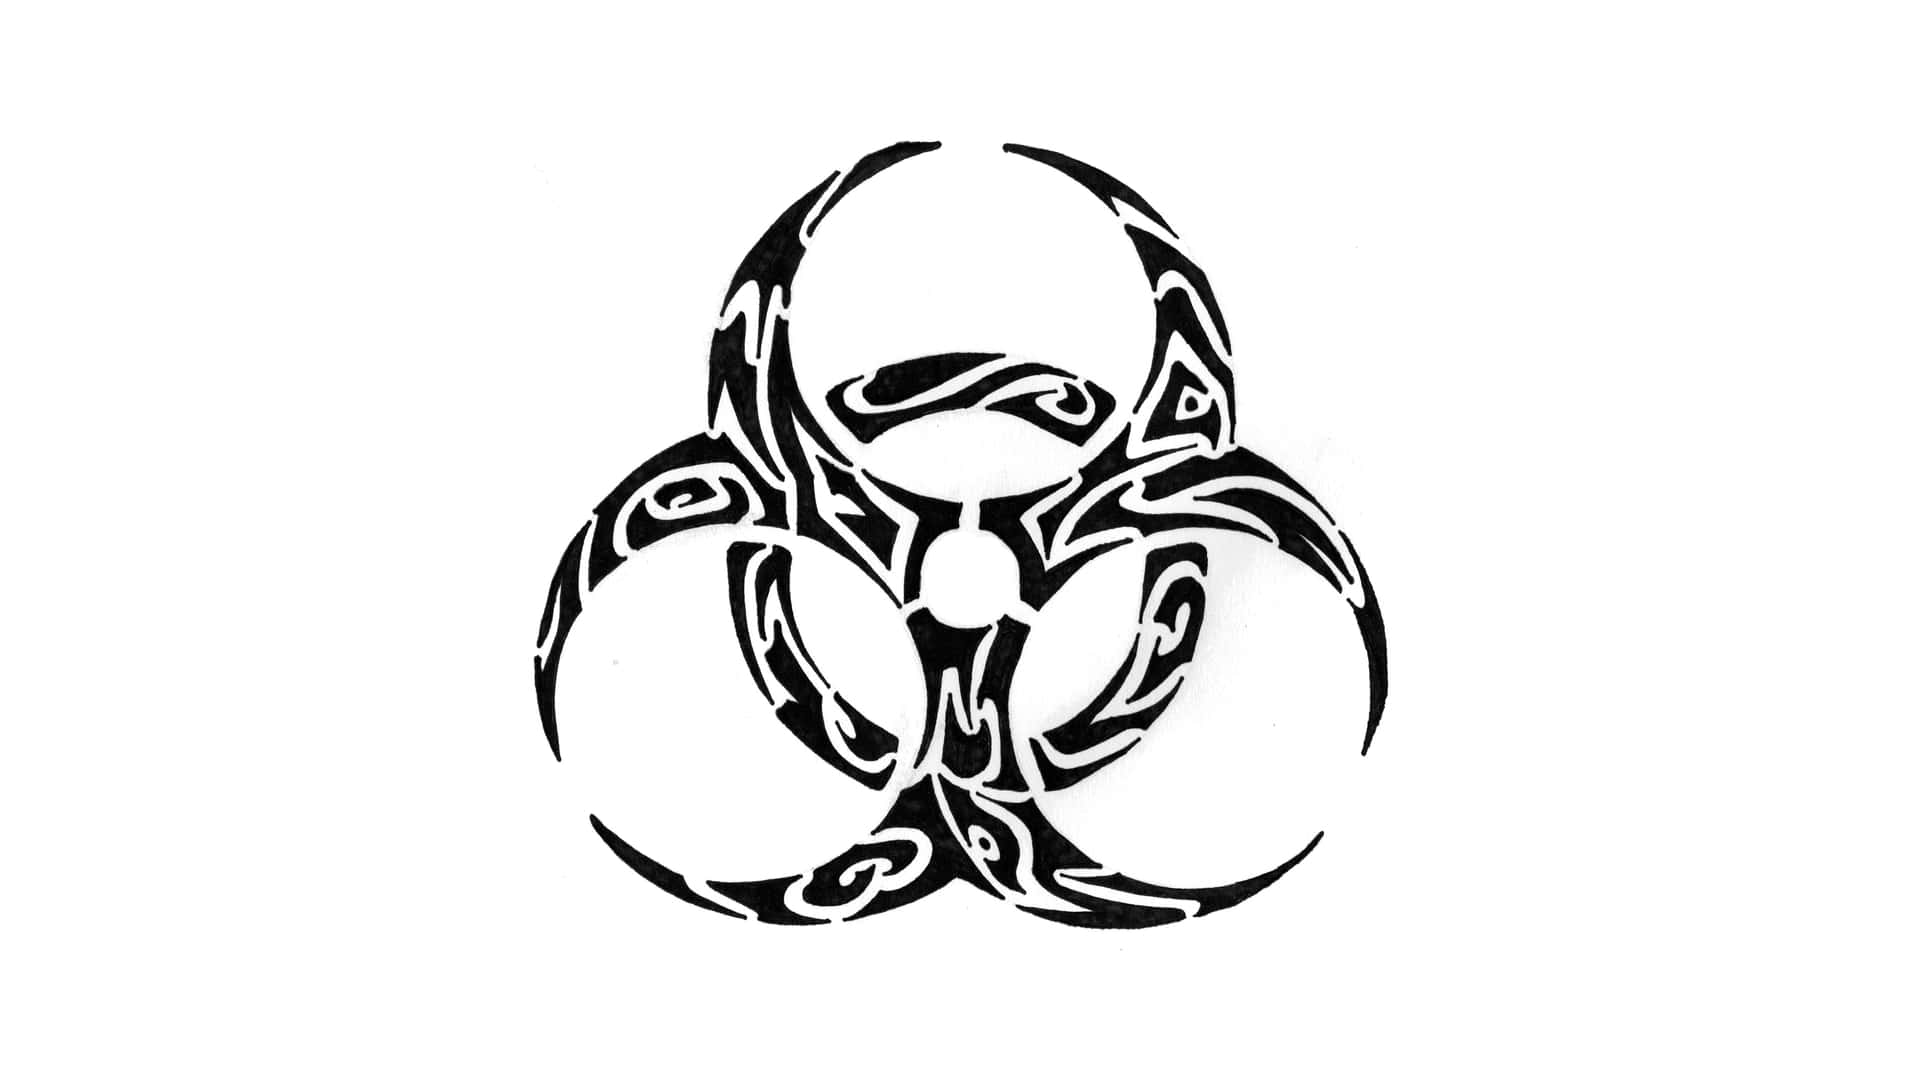 Always loved the look of the biohazard symbol   Ideias de tatuagens  Tatoo Designs de tatuagem